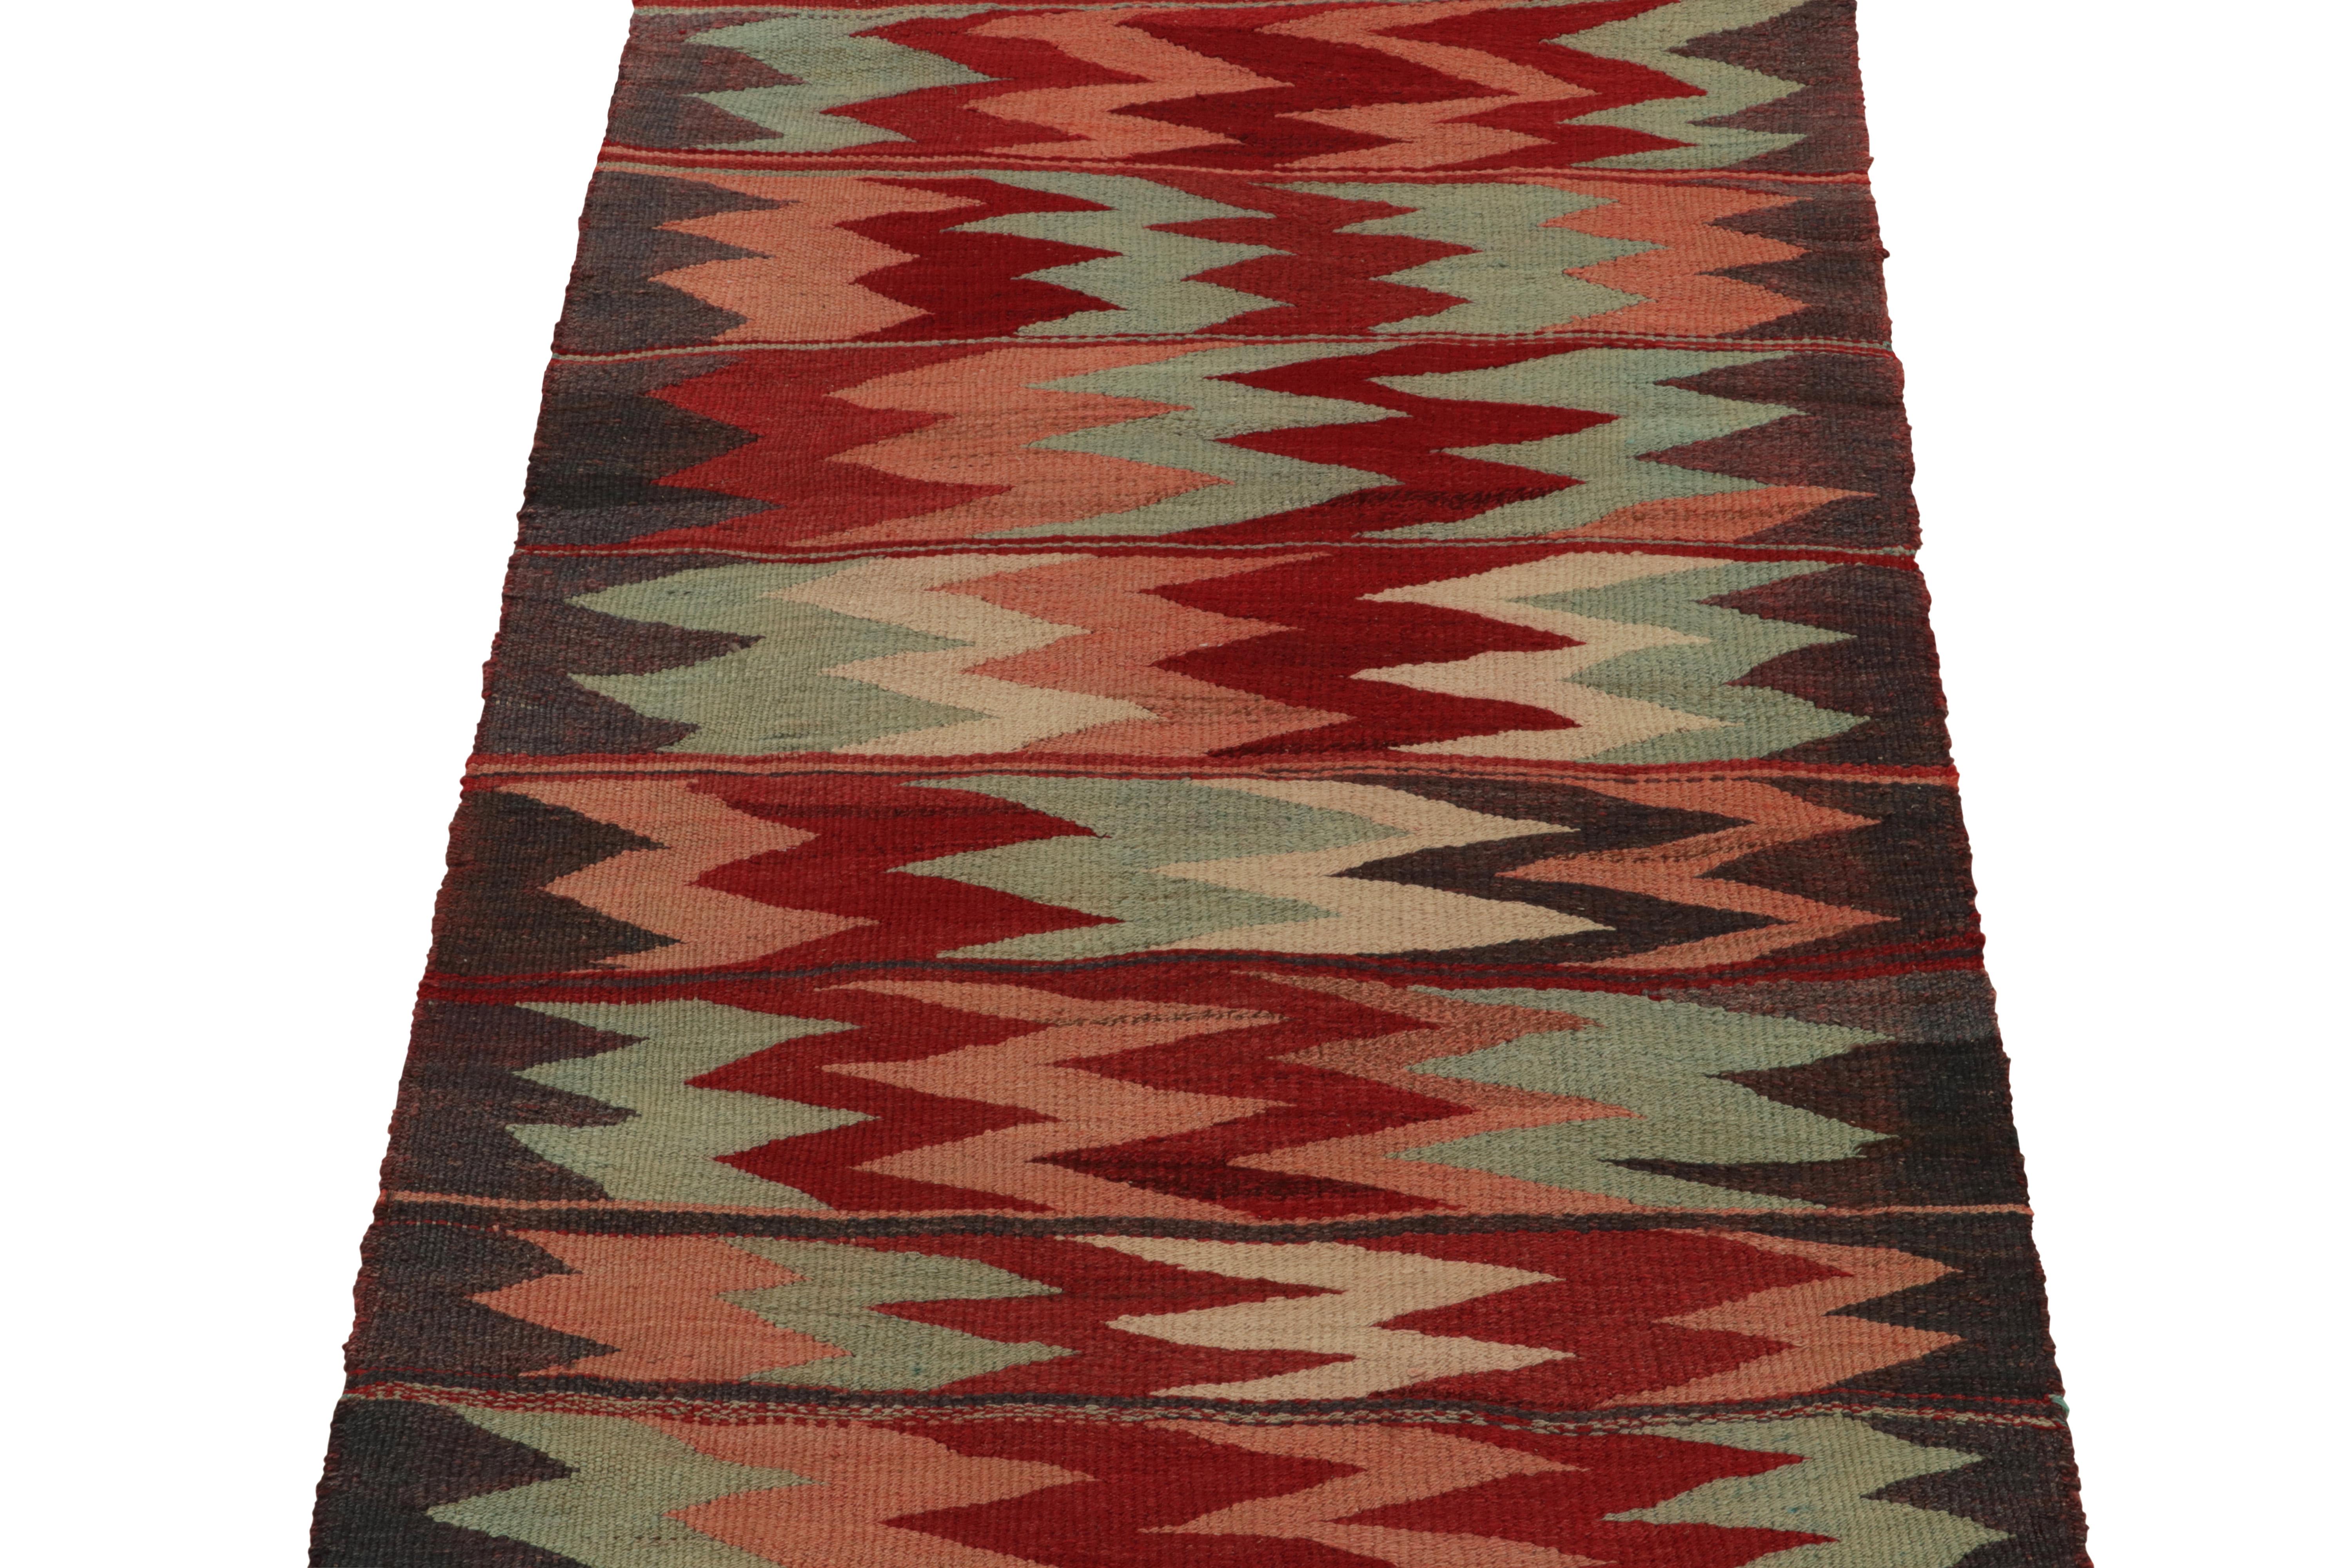 Tribal 1980s Vintage Sofreh Kilim Rug in Red, Pink Zig Zag Patterns by Rug & Kilim For Sale